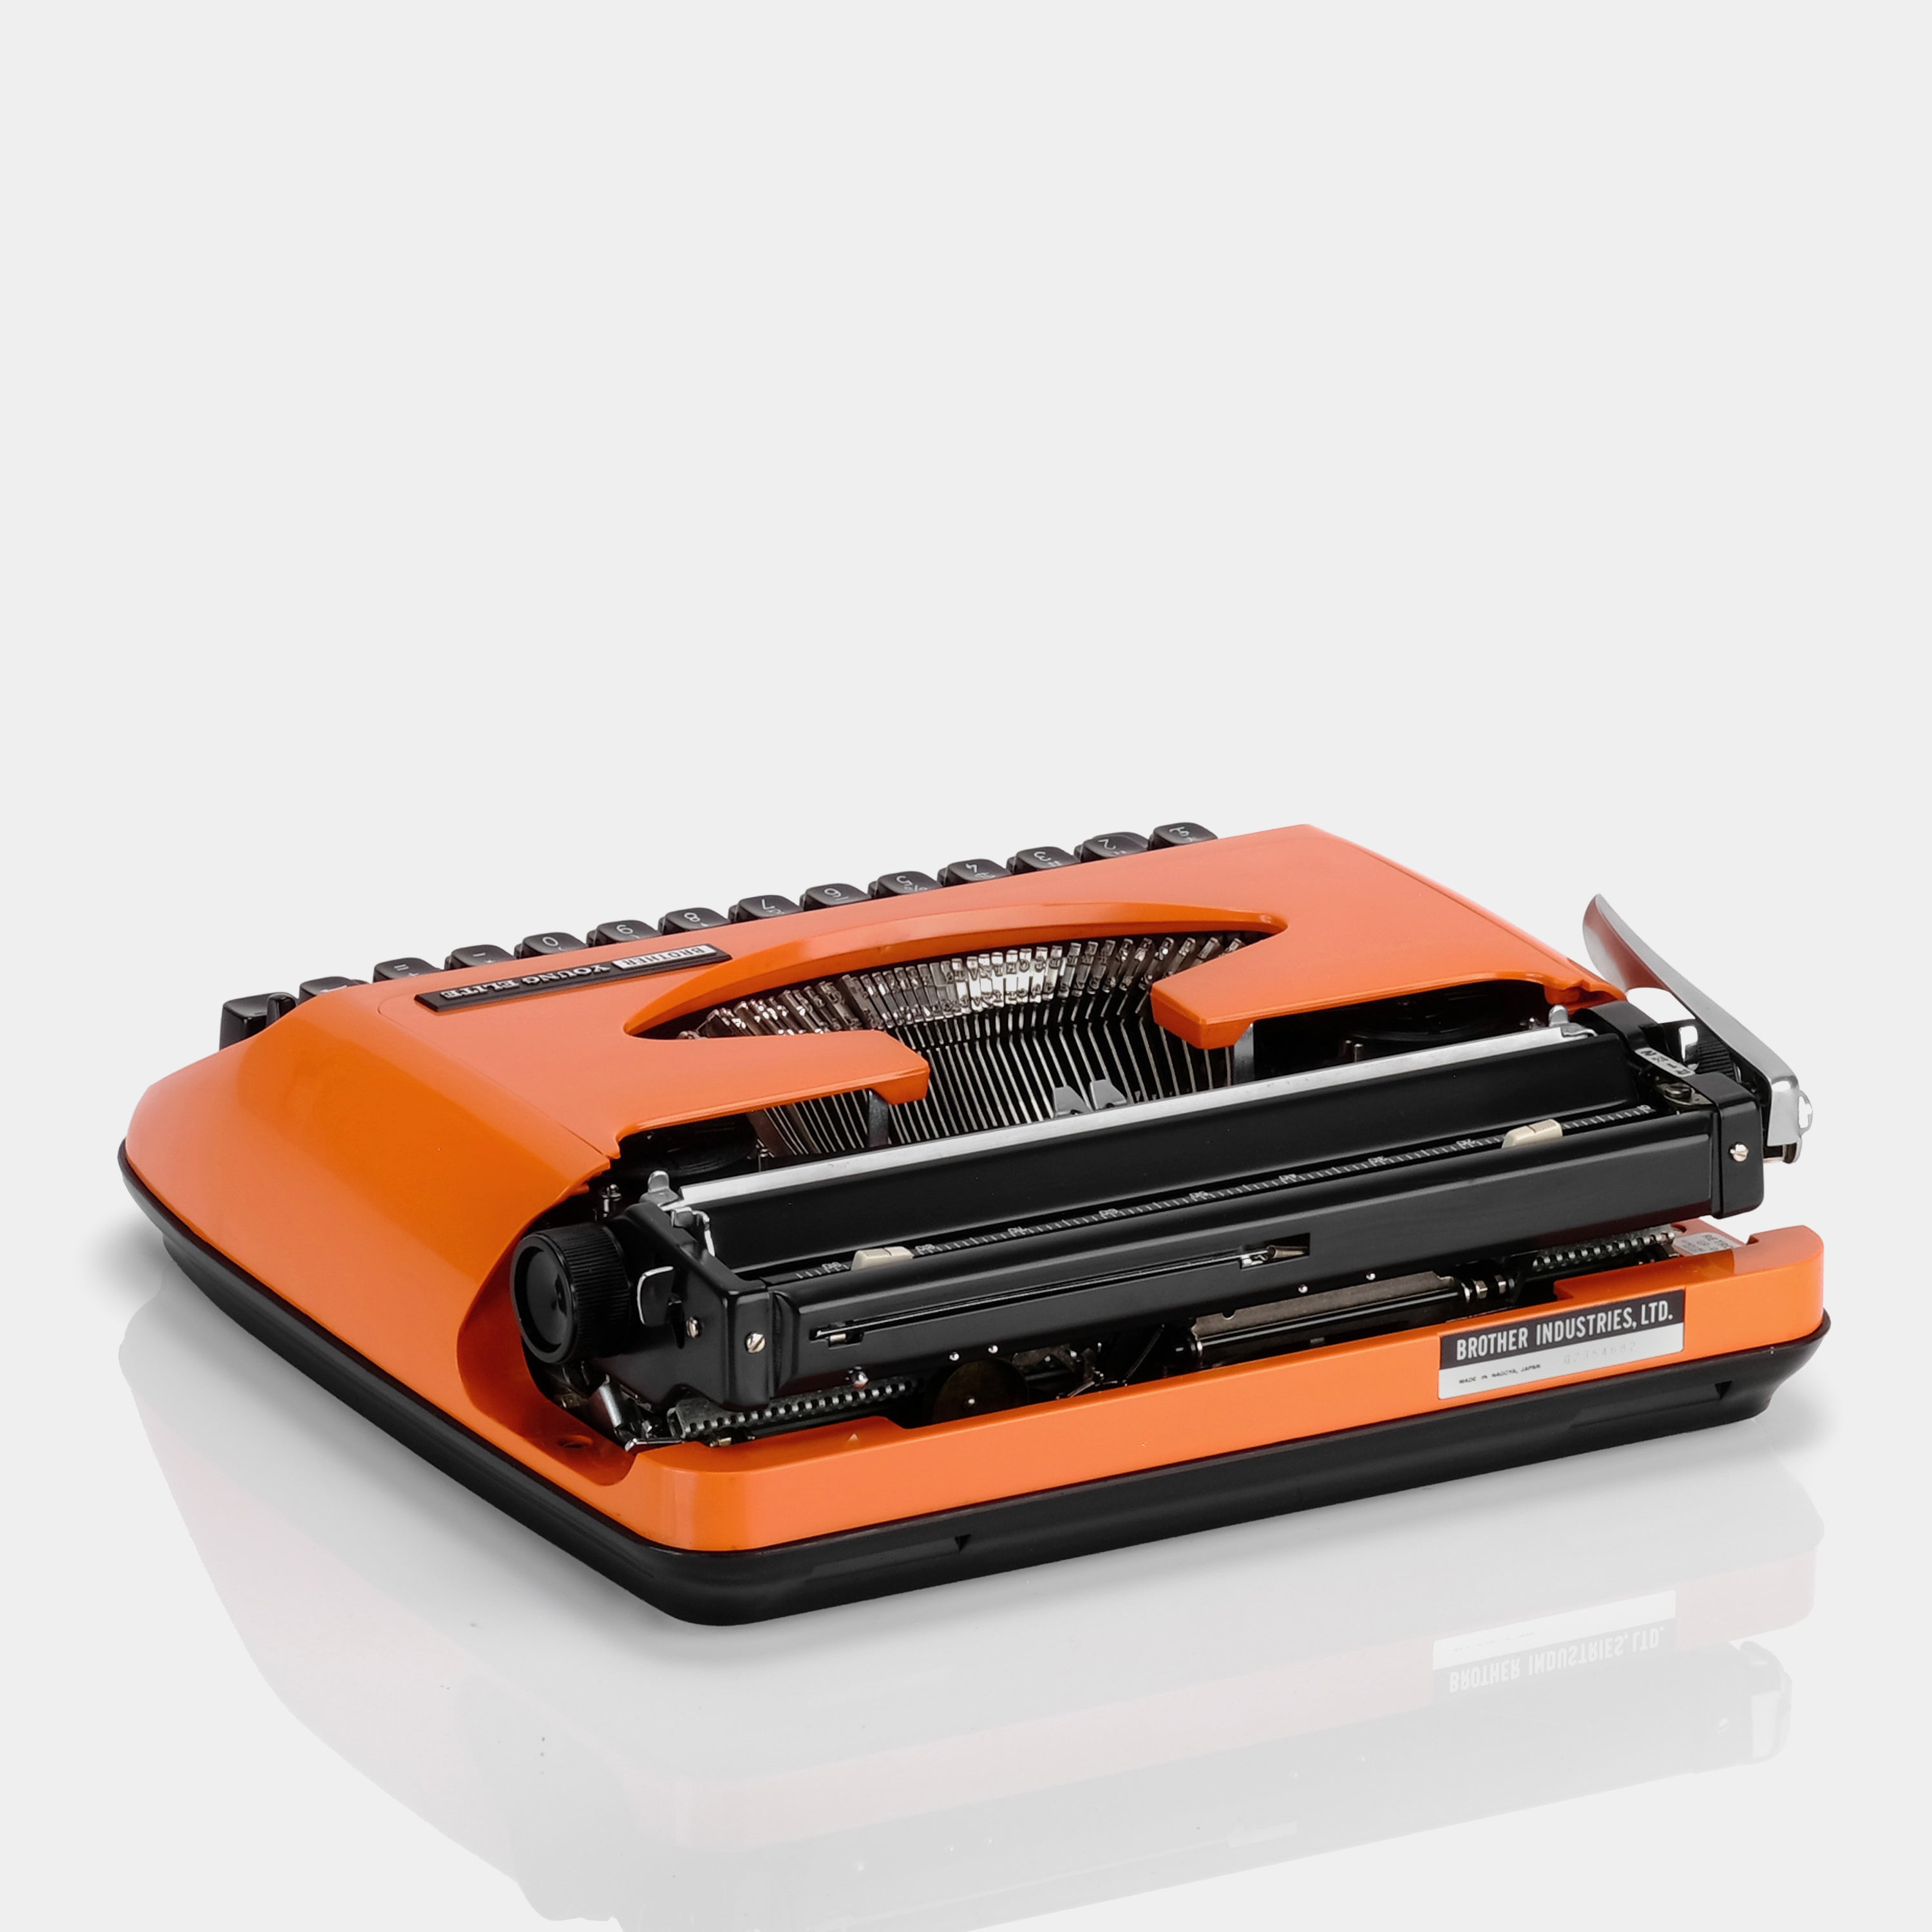 Brother Young Elite Orange Manual Typewriter and Case